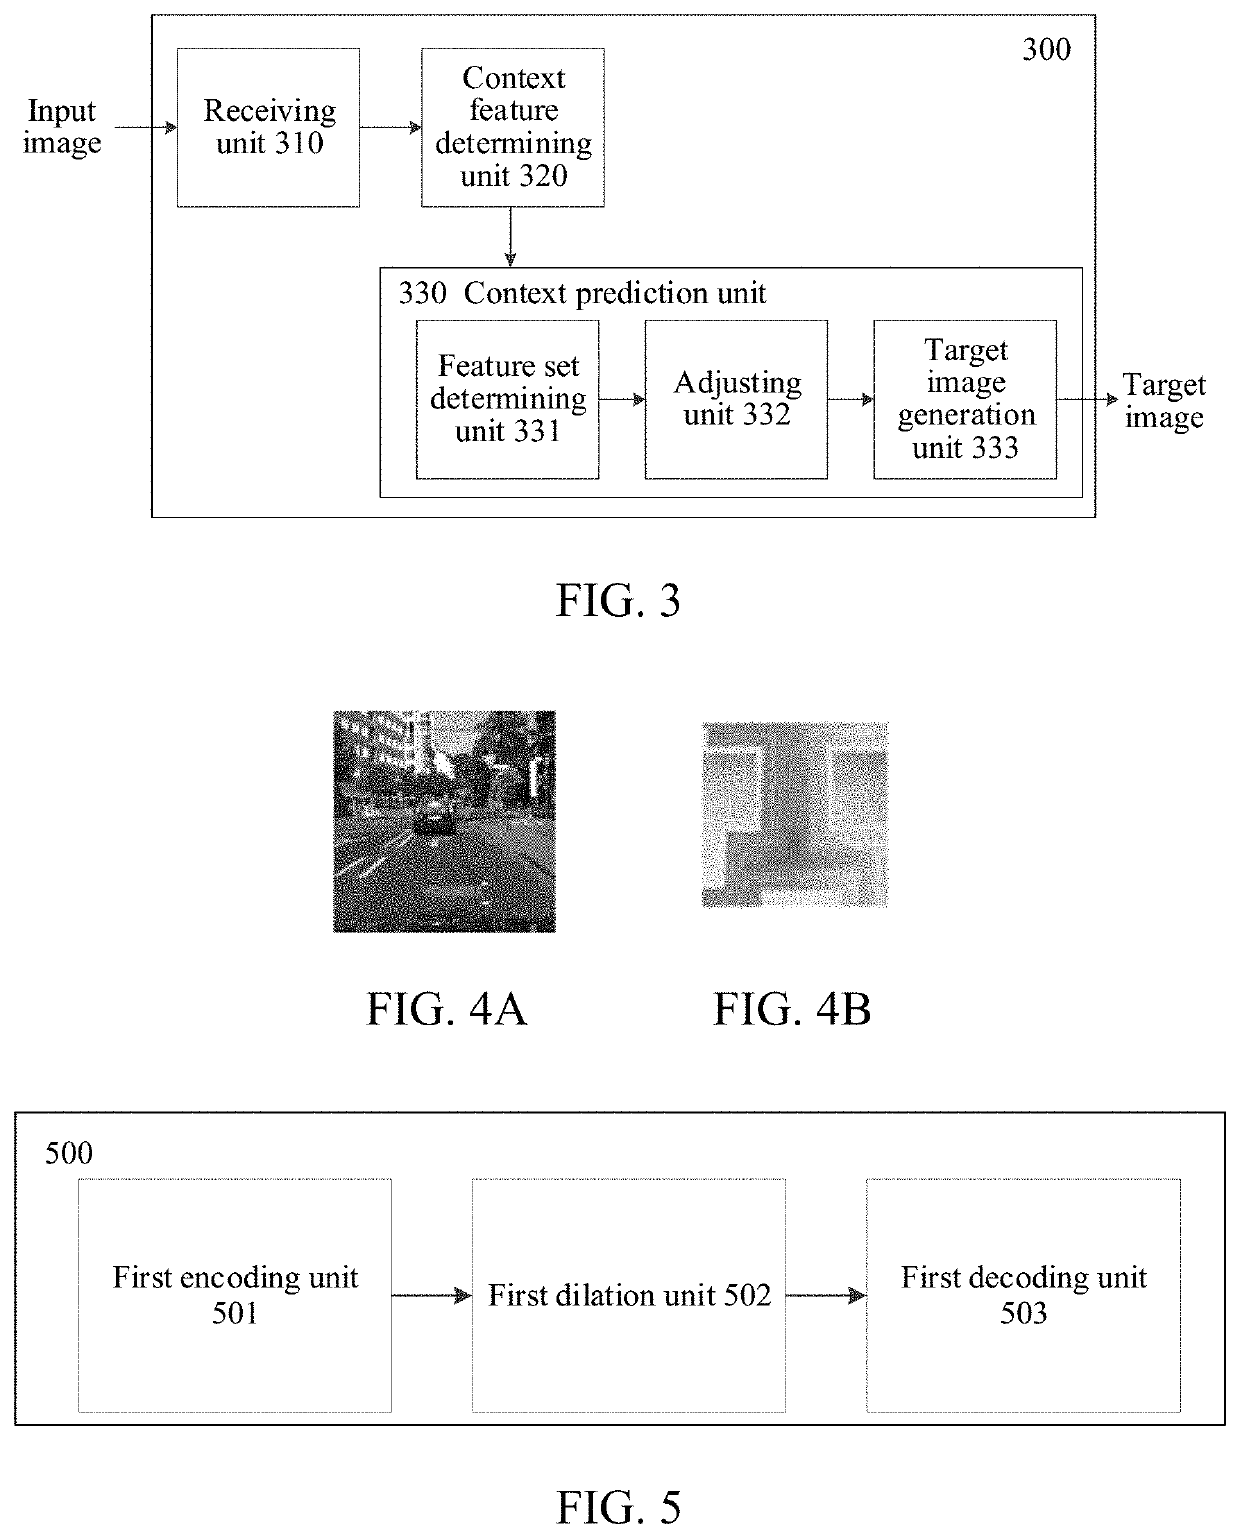 Image processing method and apparatus, device, and storage medium